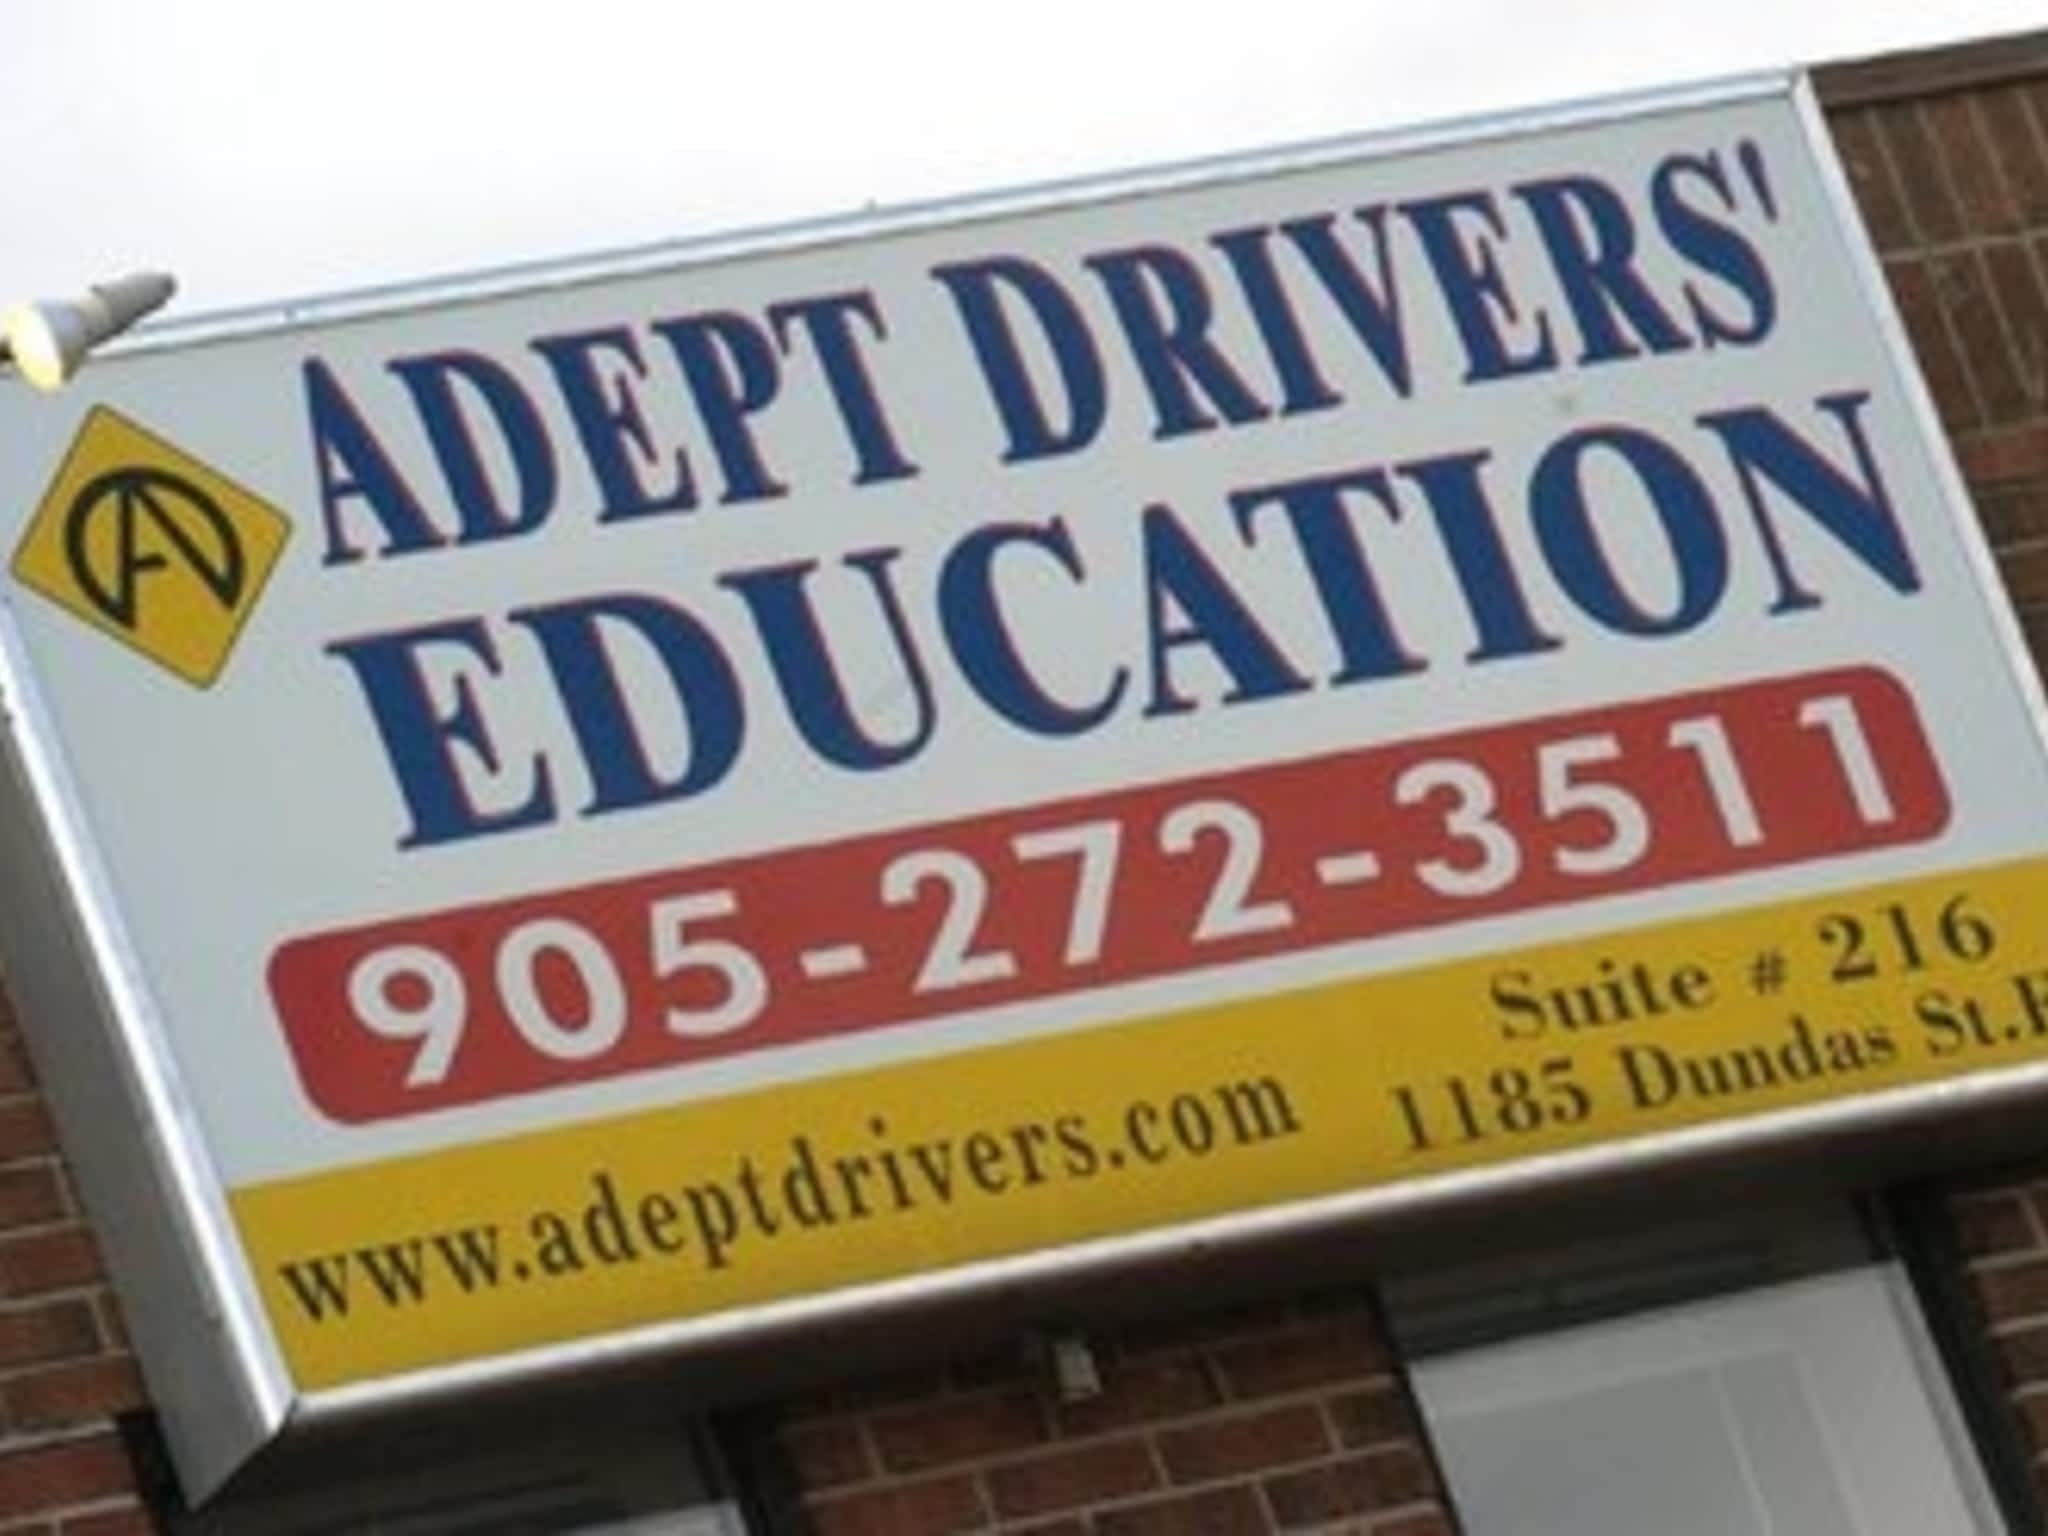 photo Adept Drivers Education Inc